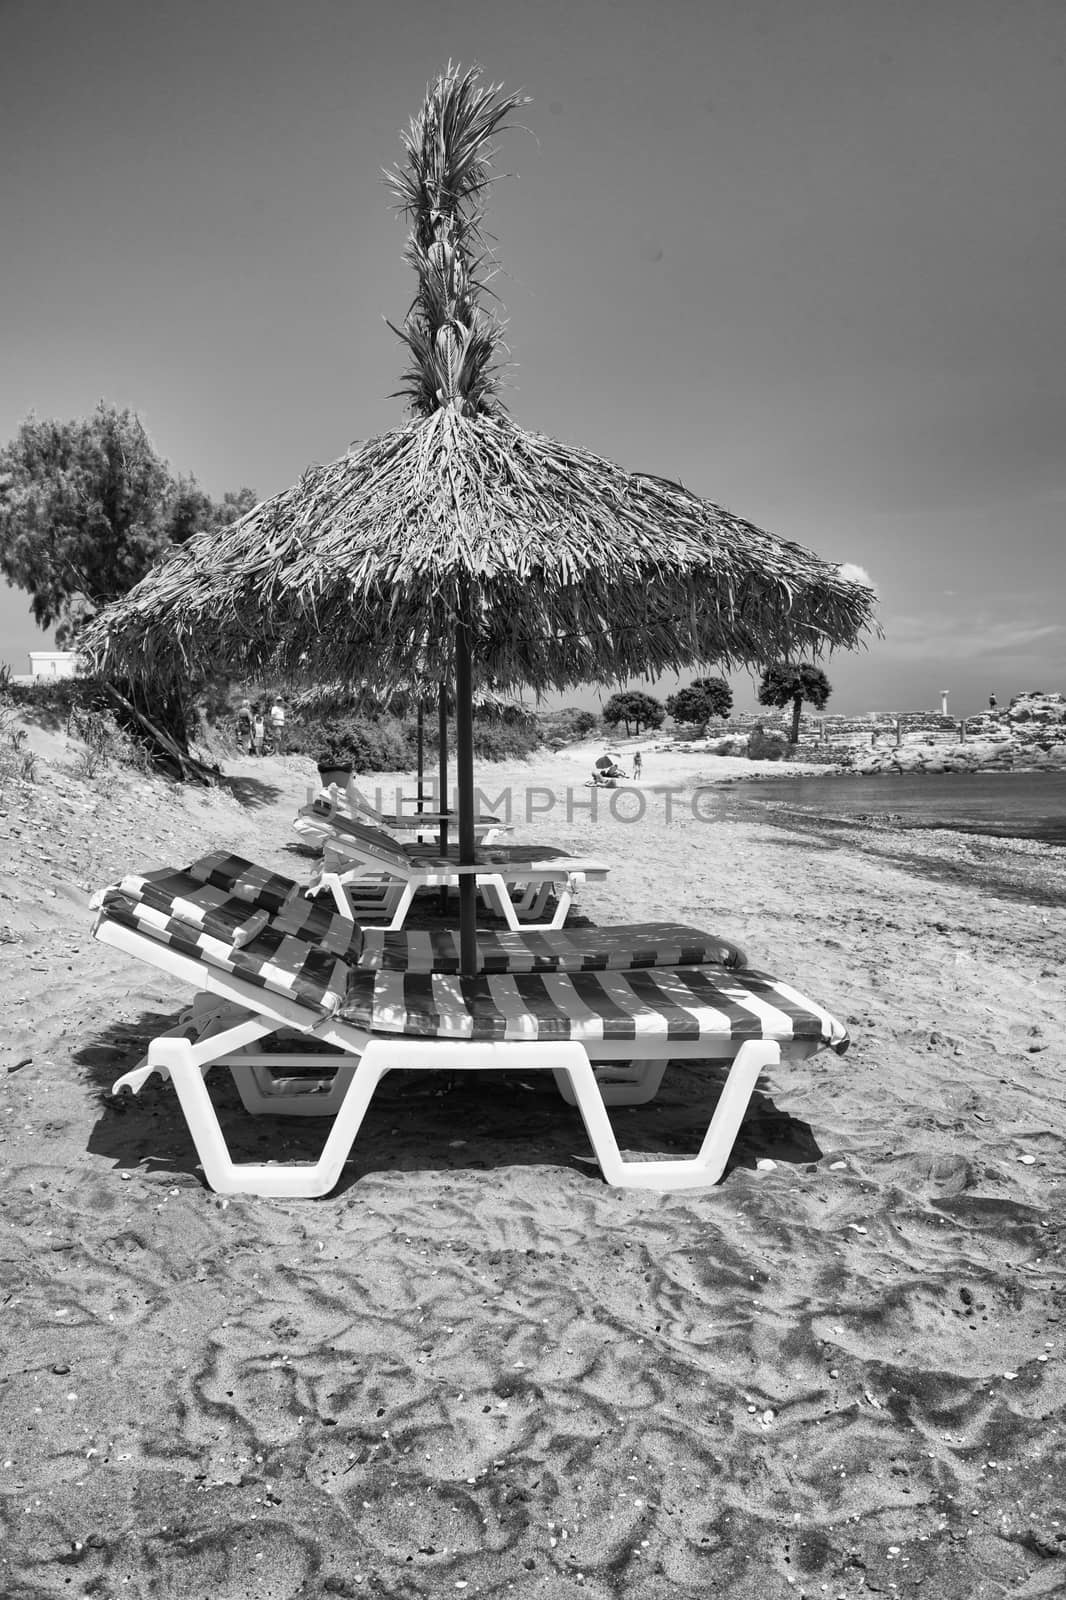 Relaxing sunbeds on the beach under straw umbrella.